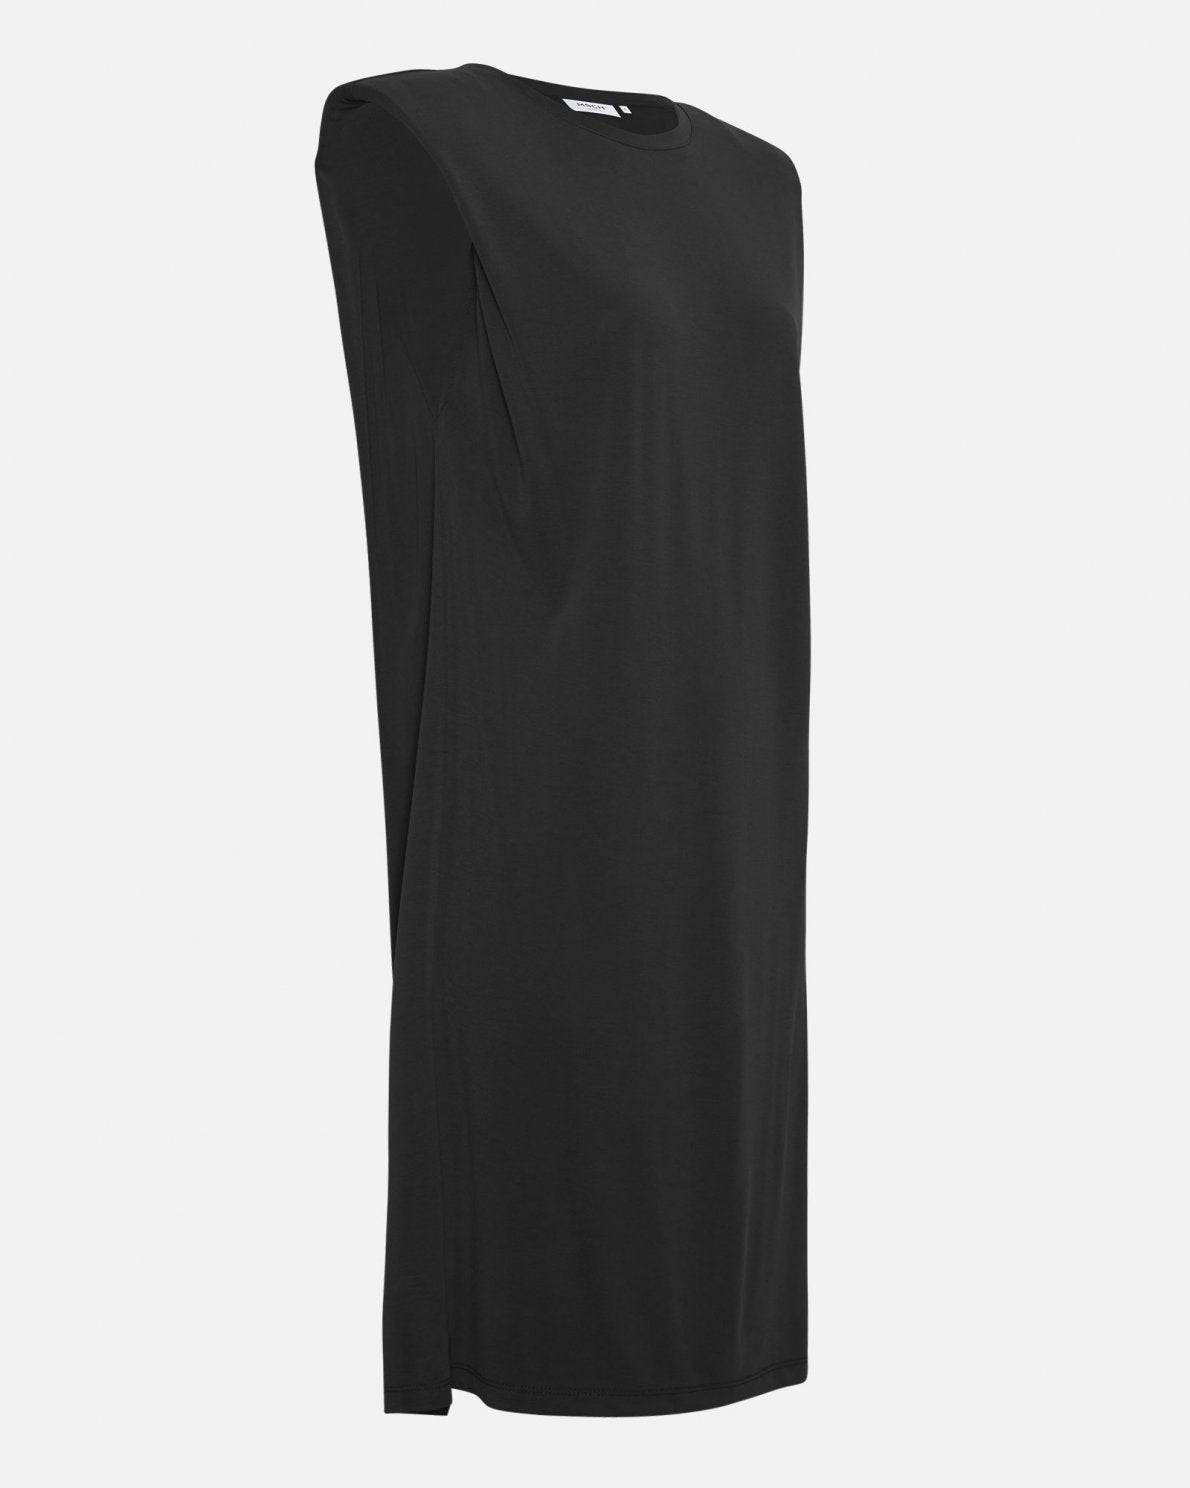 Moss Copenhagen Sleeveless Dress in Black - Your Style Your Story